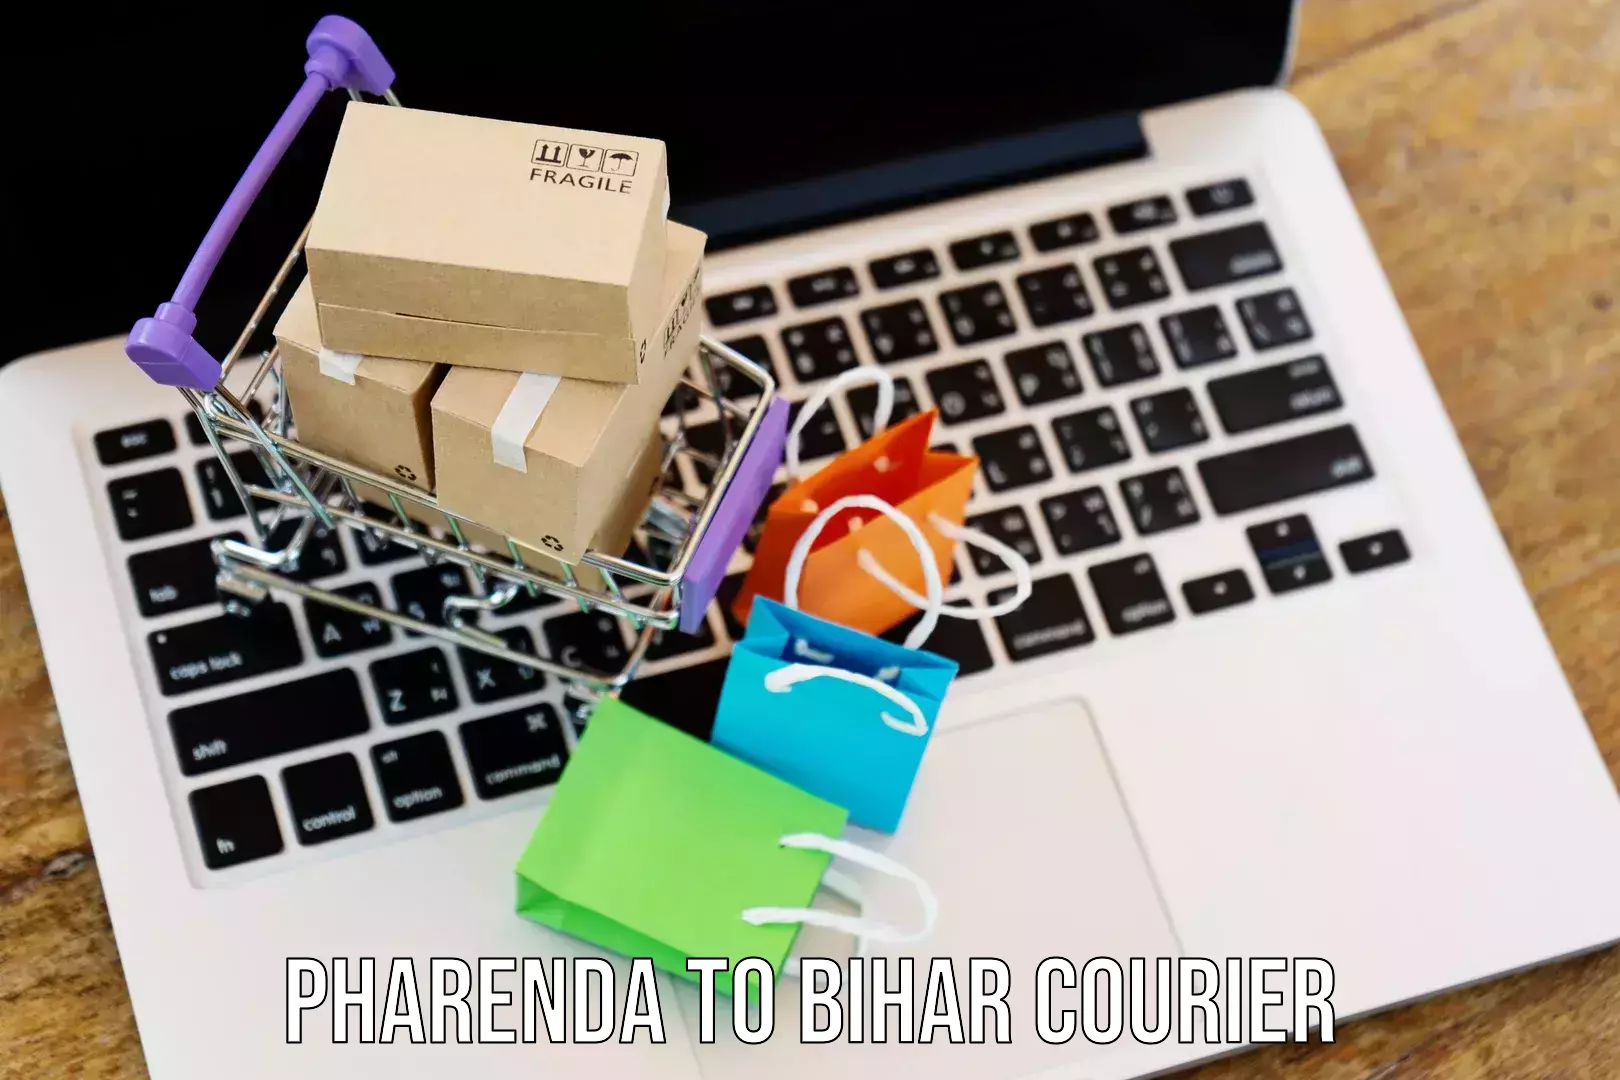 Professional courier handling Pharenda to Katoria